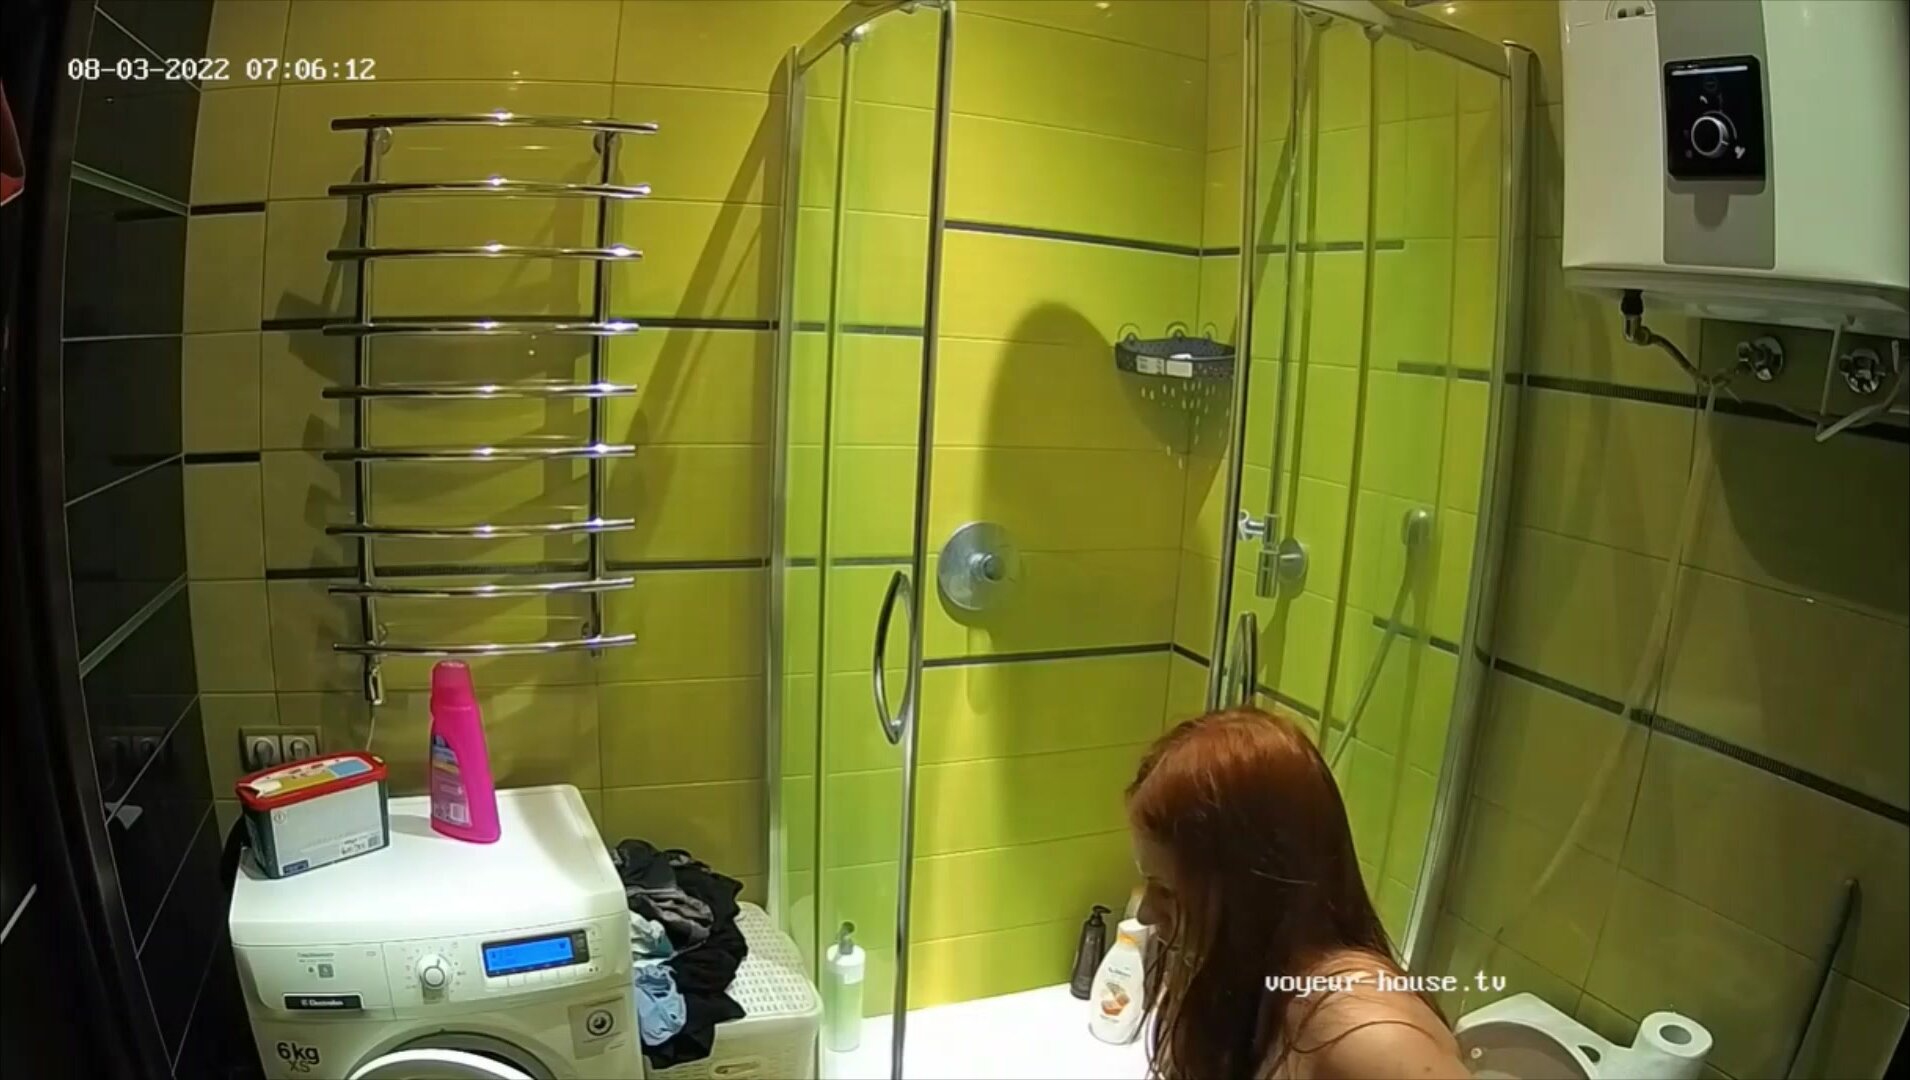 Woman pooping in Toilet pic